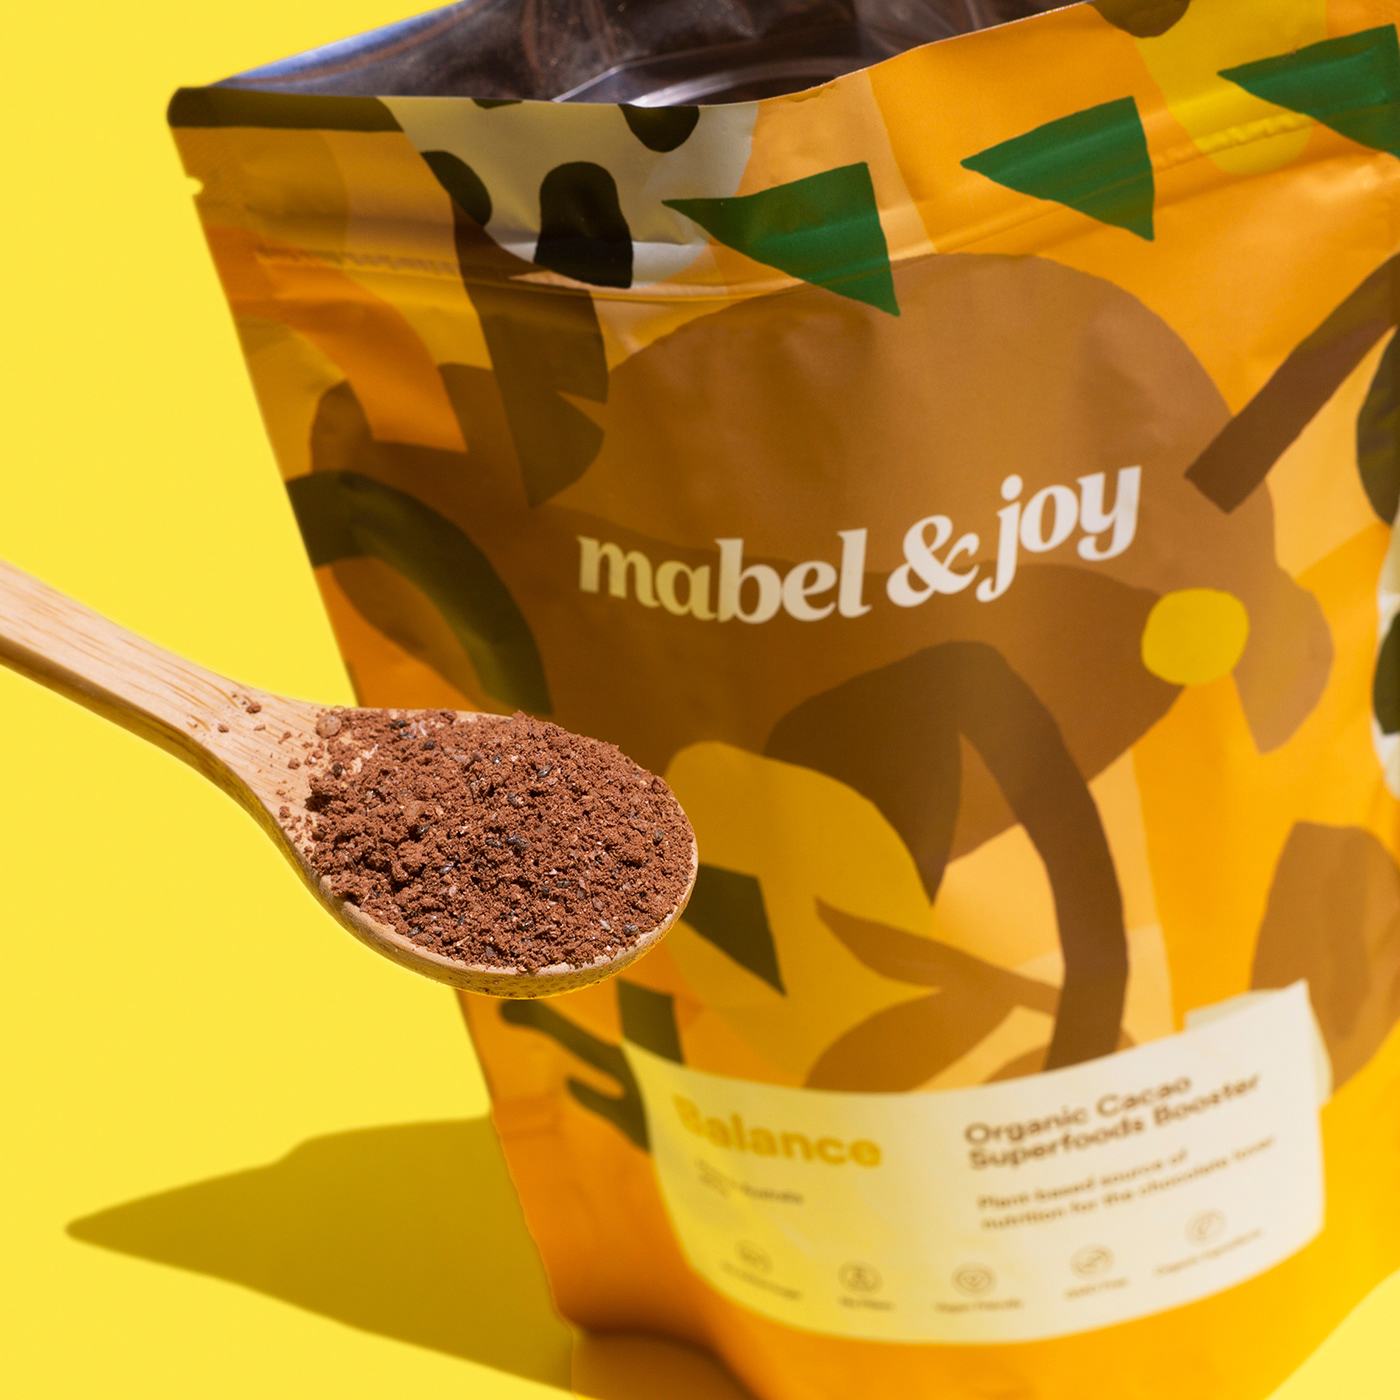 Jo Cutri Studio. Branding. Packaging Design. Graphic Design. Organic Superfoods. Food Packaging